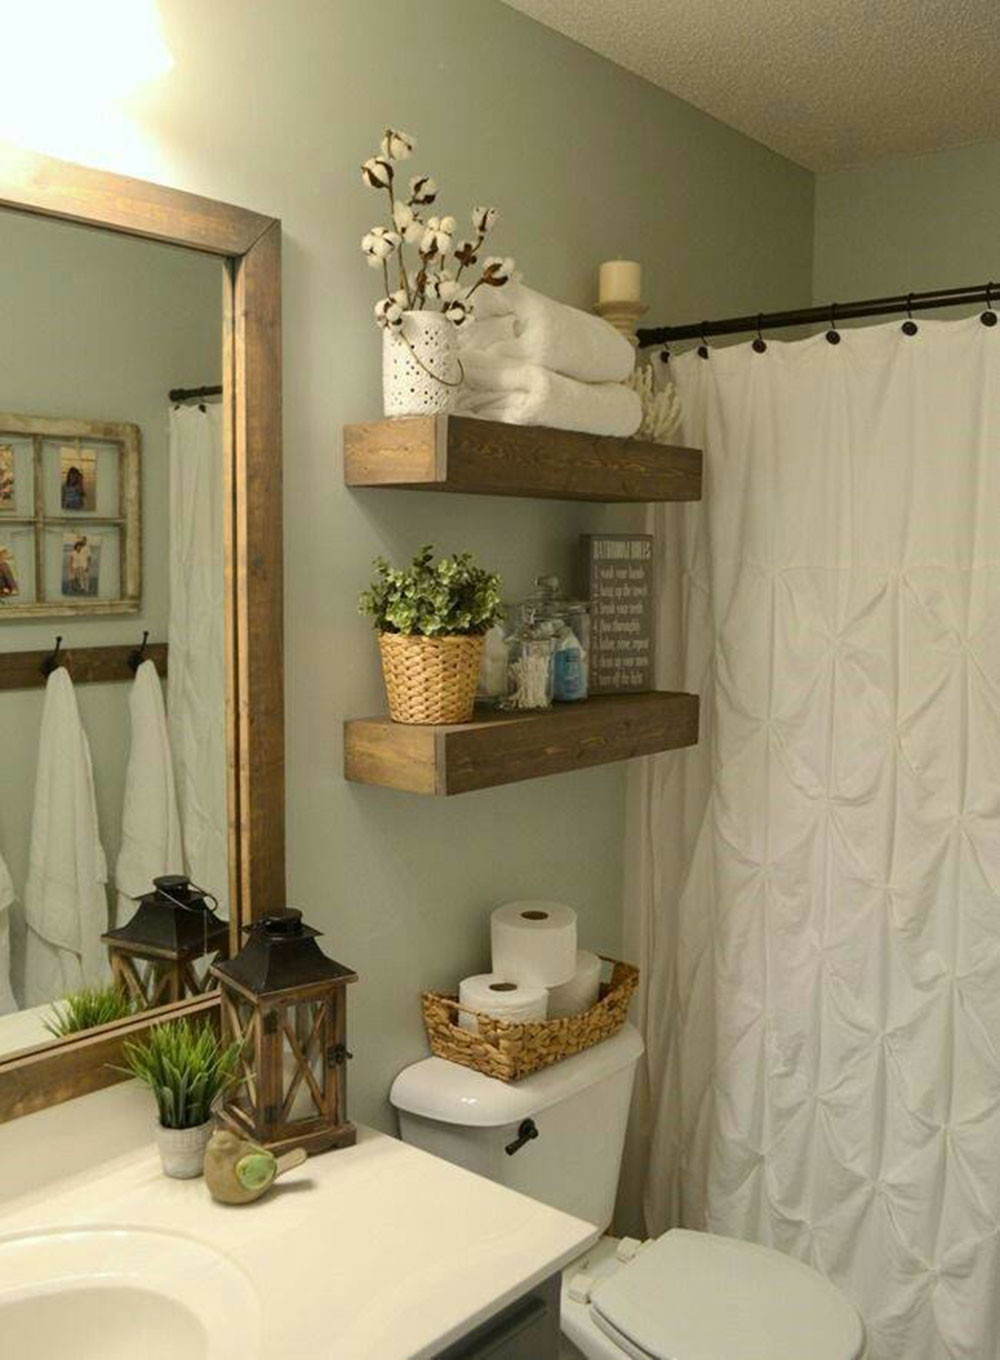 Small Bathroom Wall Shelf
 Small bathroom shelf ideas to optimize your bathroom space